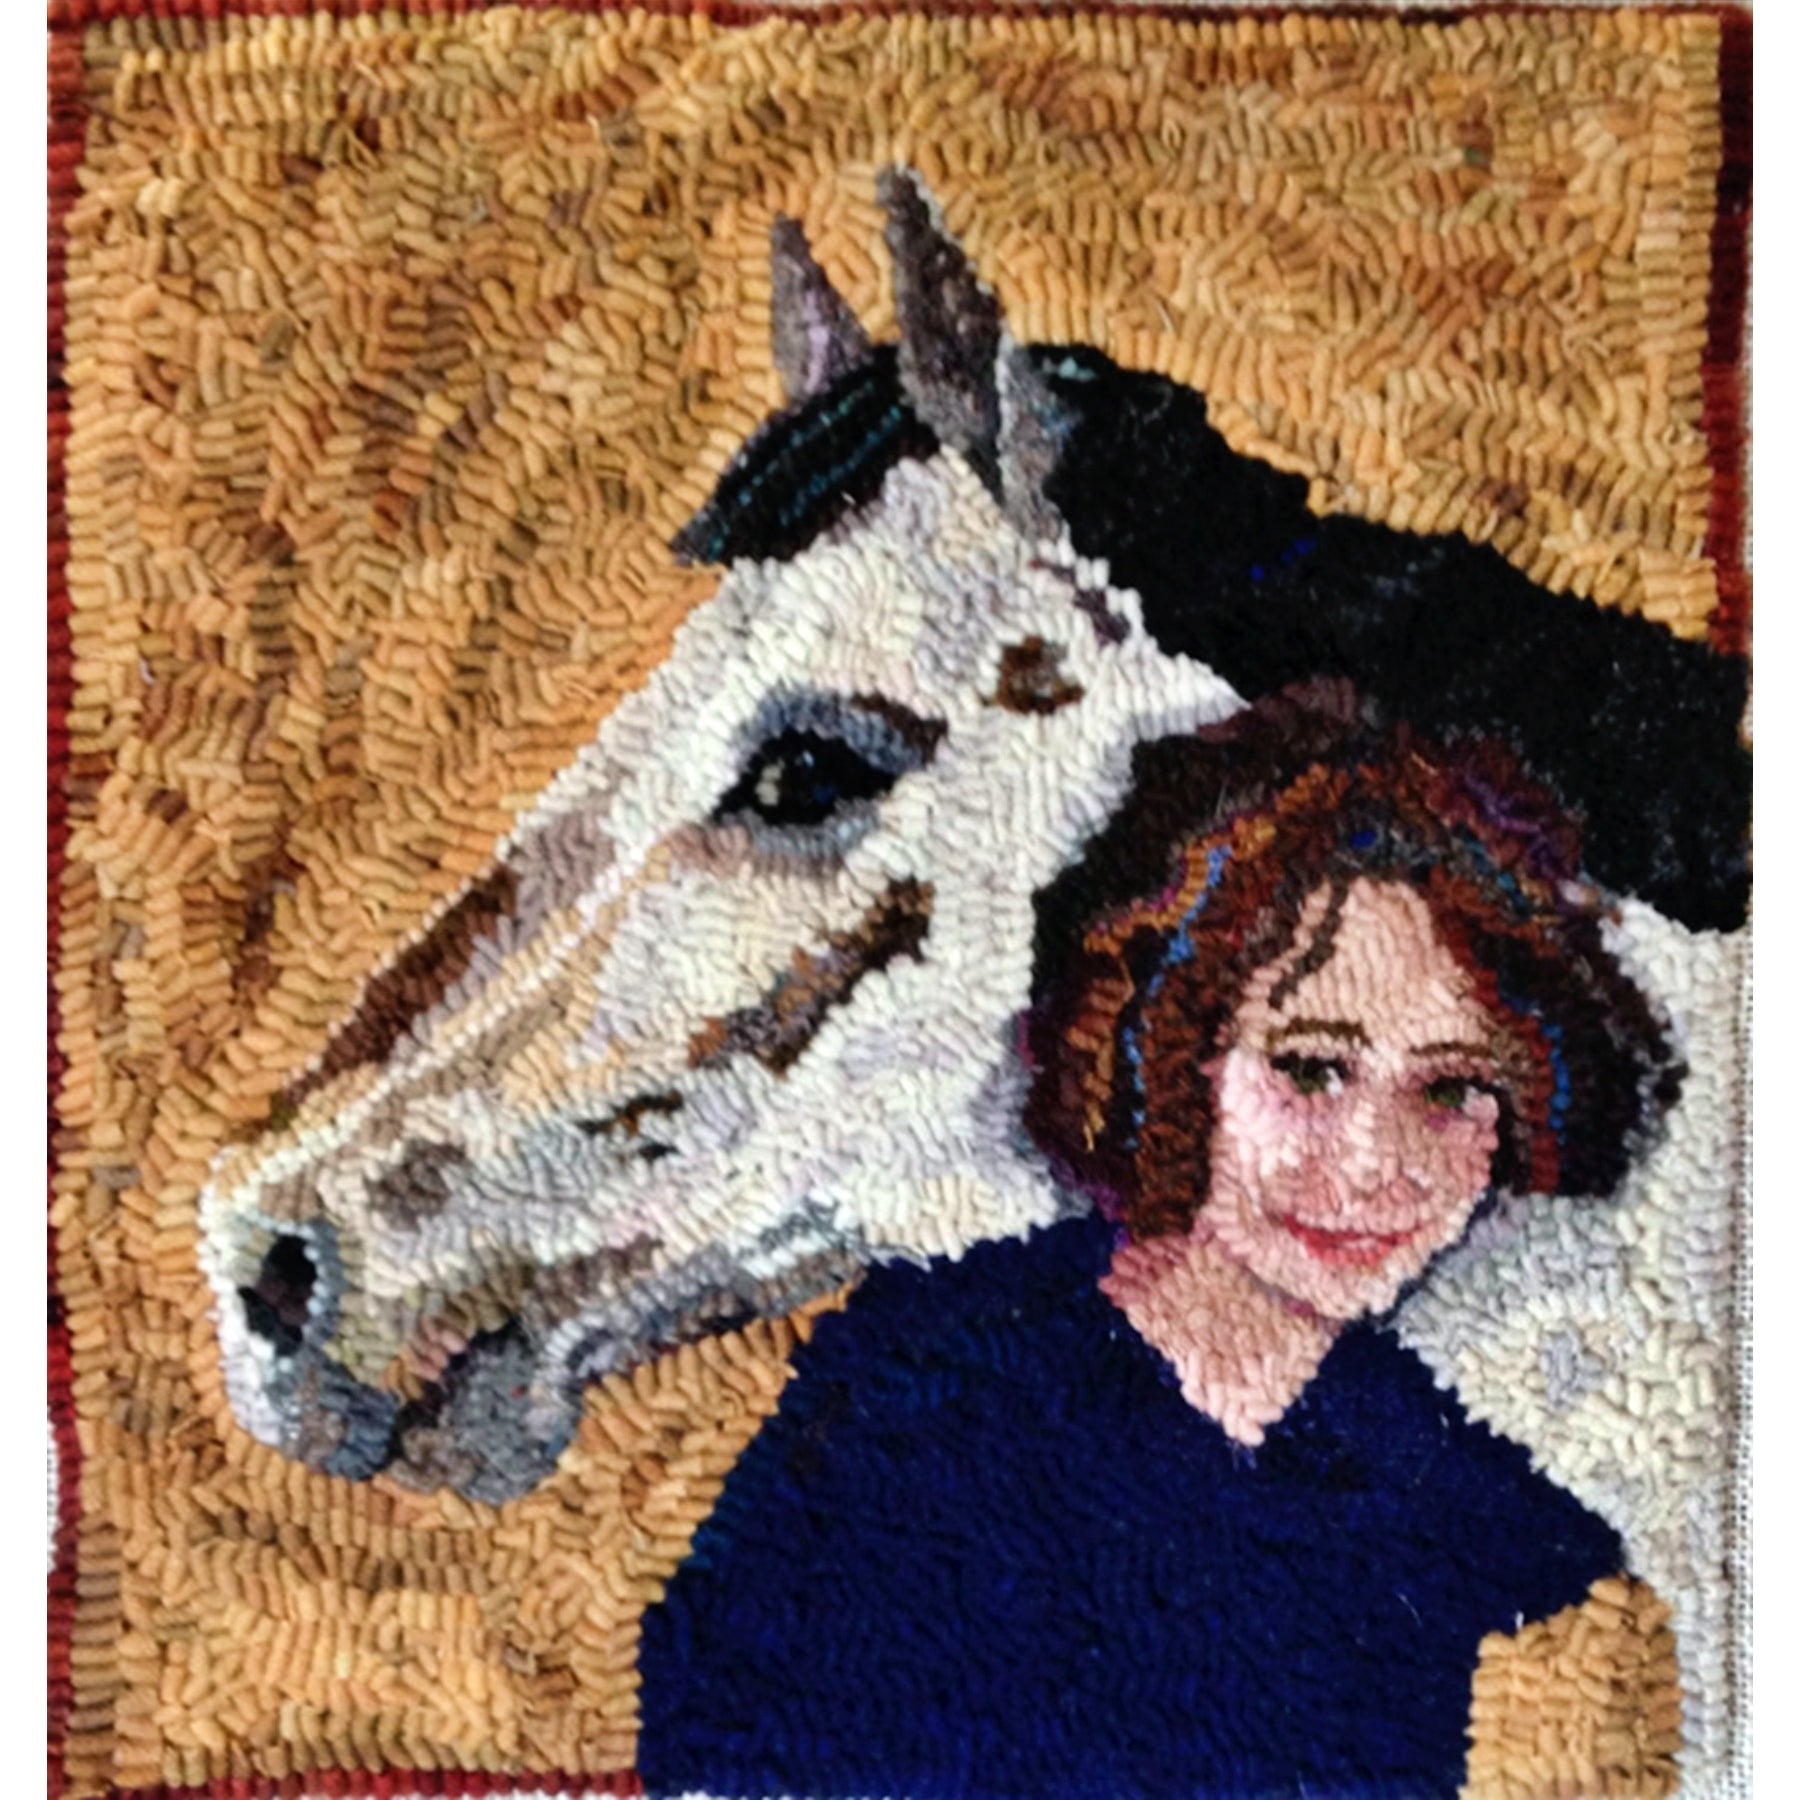 Horse Hug, rug hooked by Cheryl Bollenbach